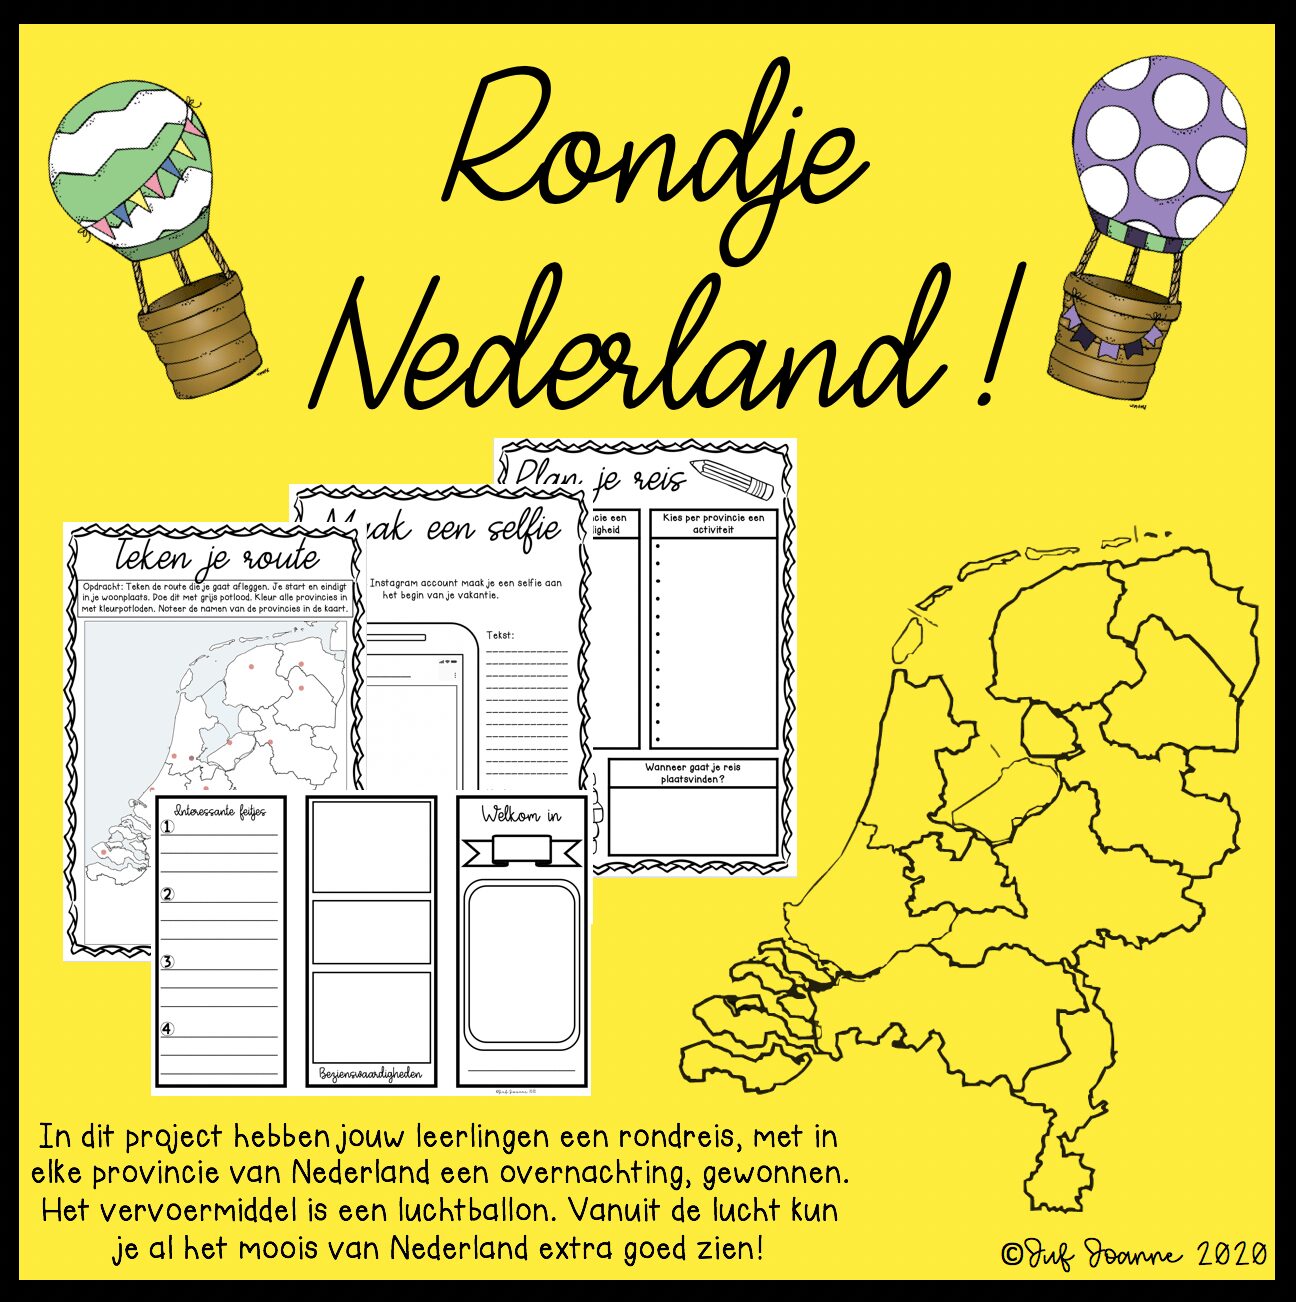 cover-rondje-nederland